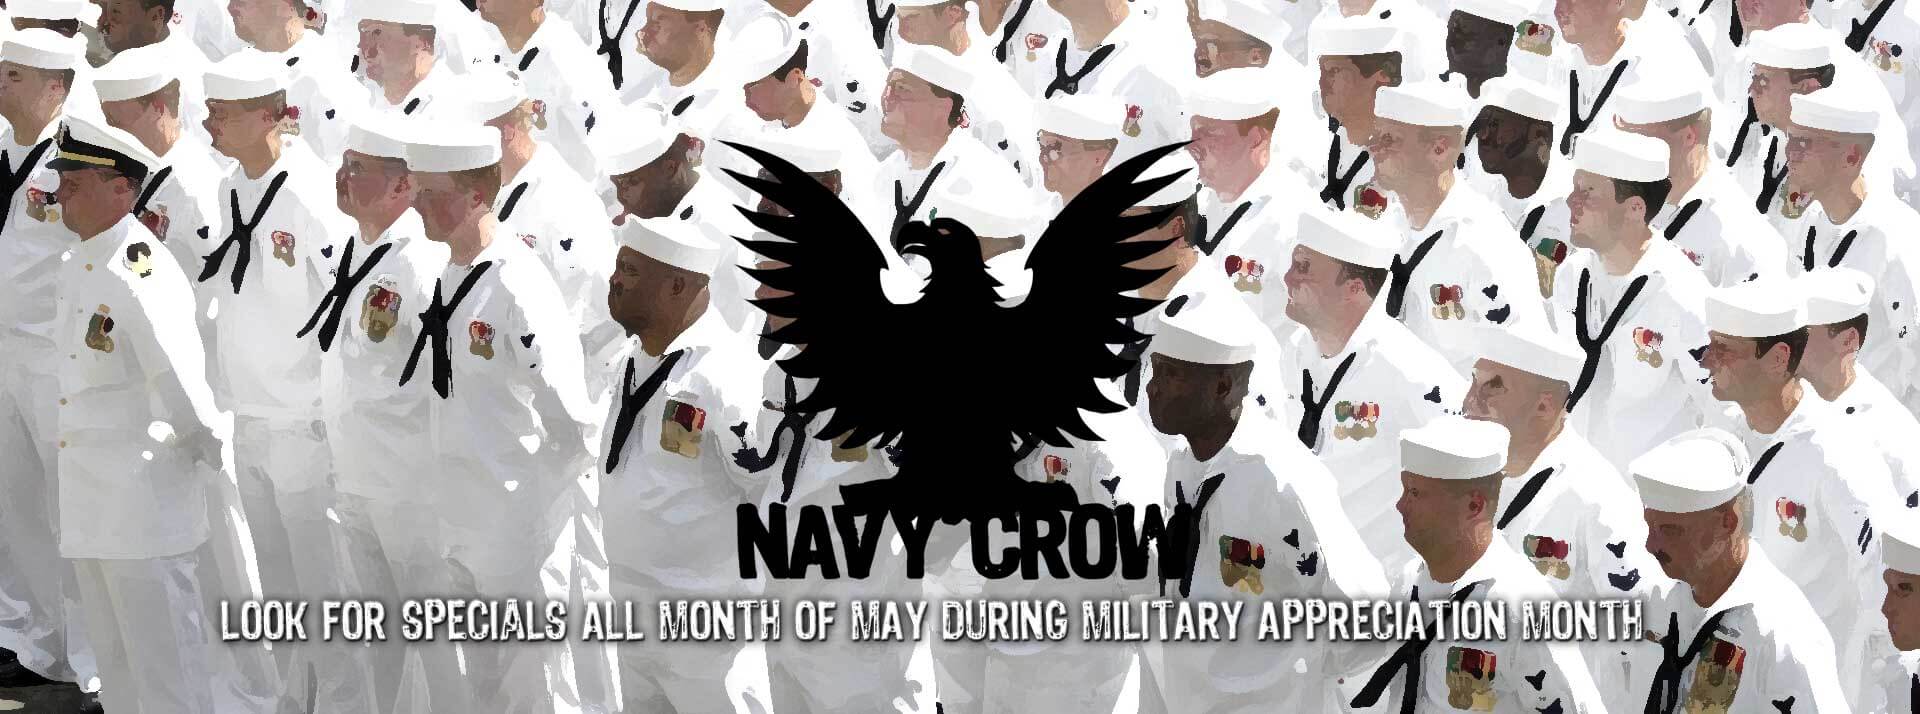 Navy_Crow_Header-Military-Appreciation-Month